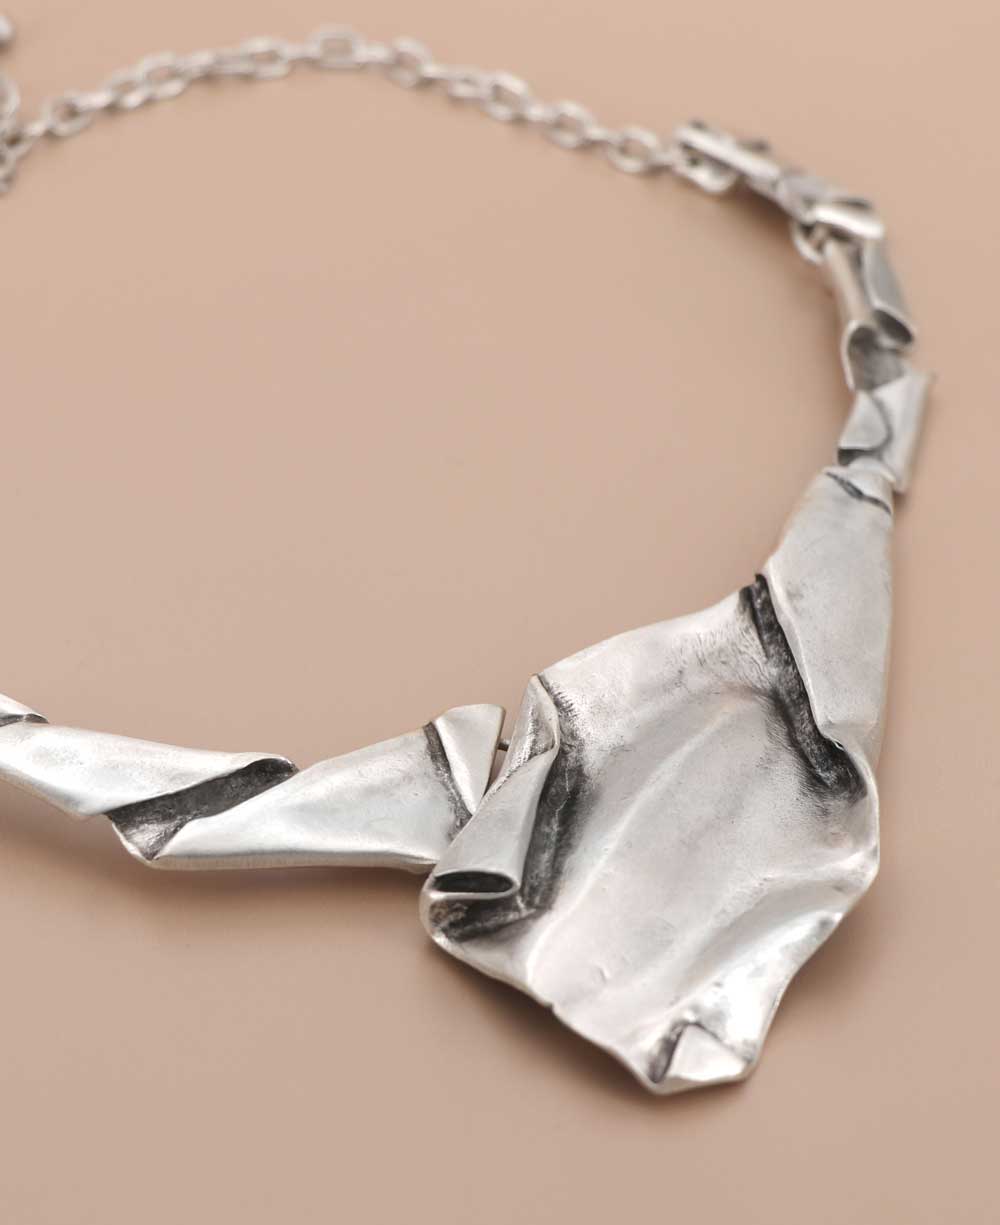 Adjustable crushed paper necklace